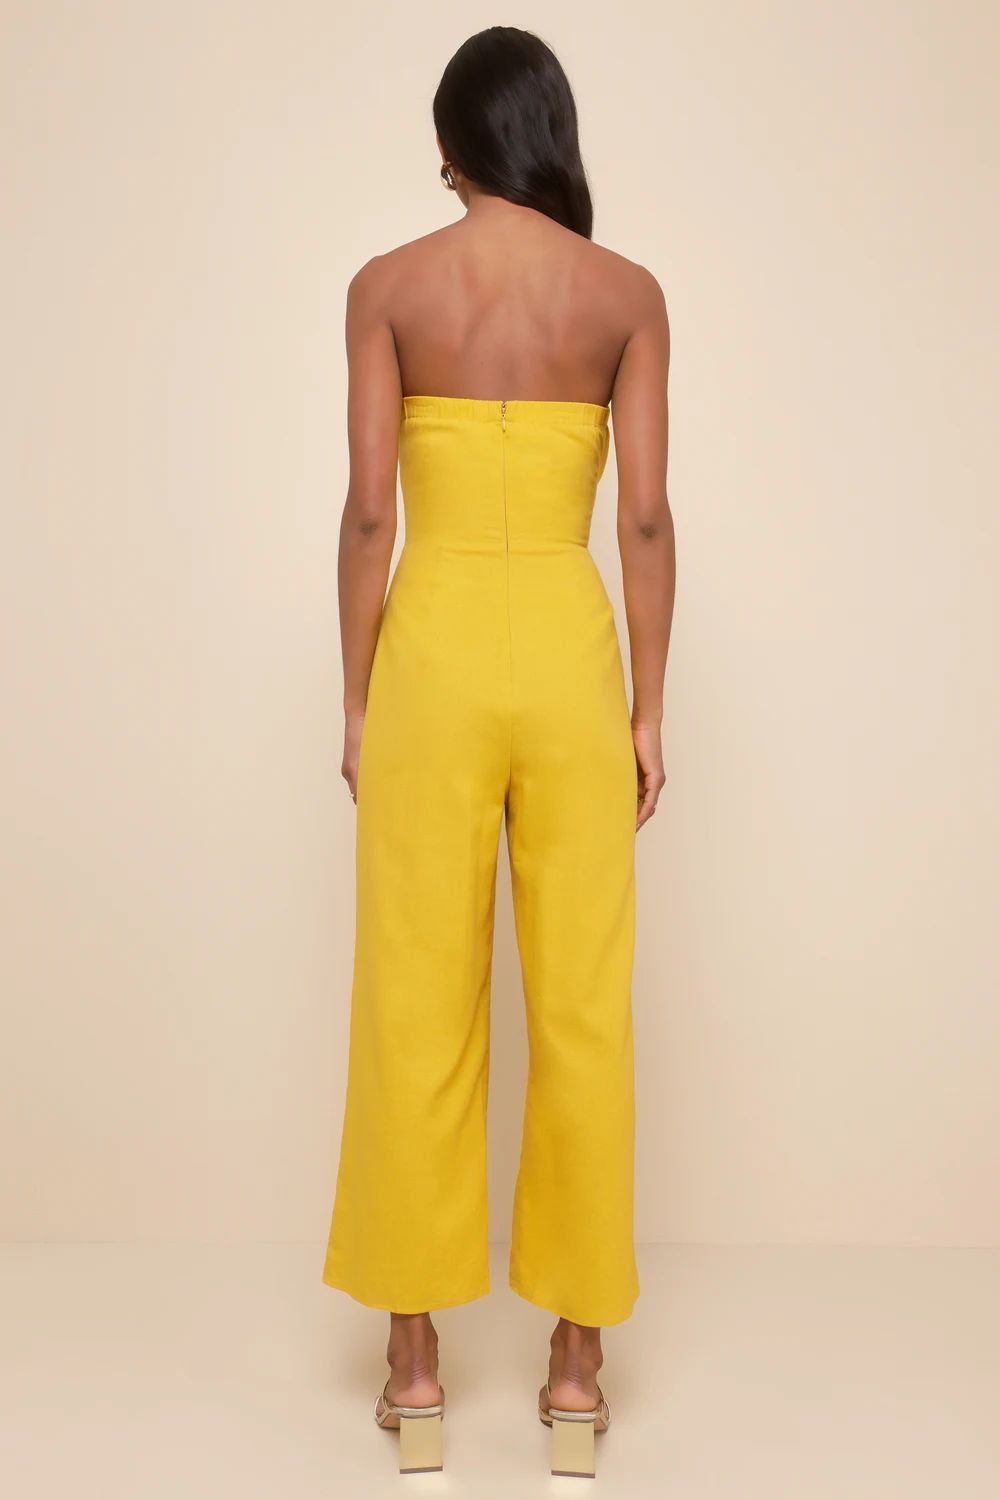 Sunshine Aura Mustard Yellow Tie-Front Strapless Jumpsuit | Lulus